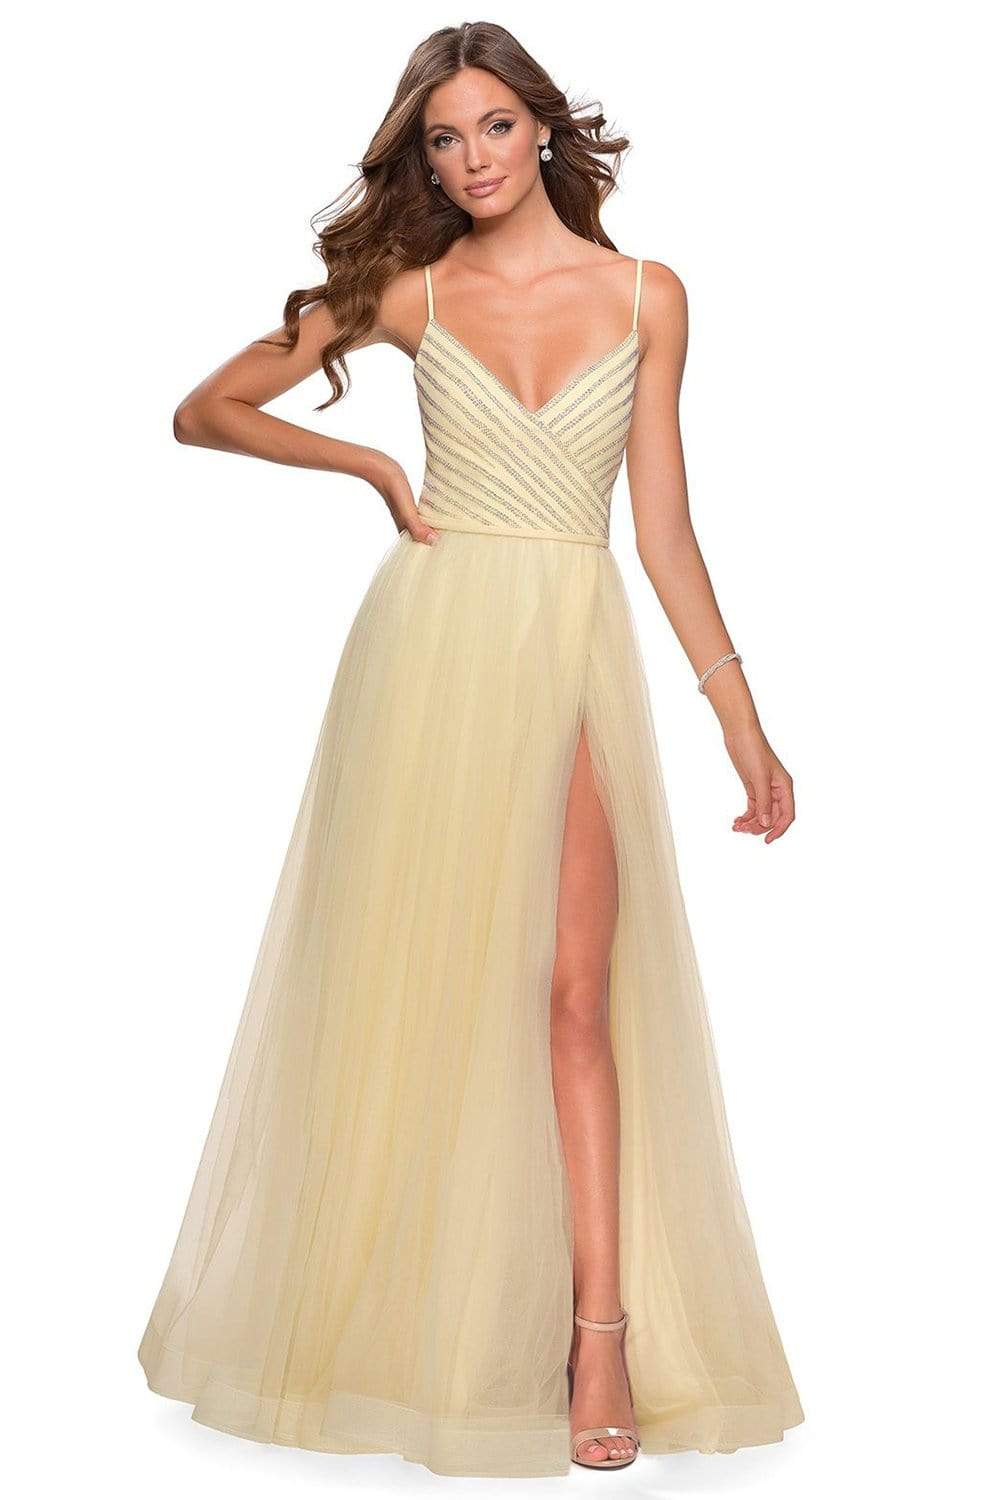 La Femme - 28511 Asymmetric Rhinestone Beadings Tulle Prom Dress
